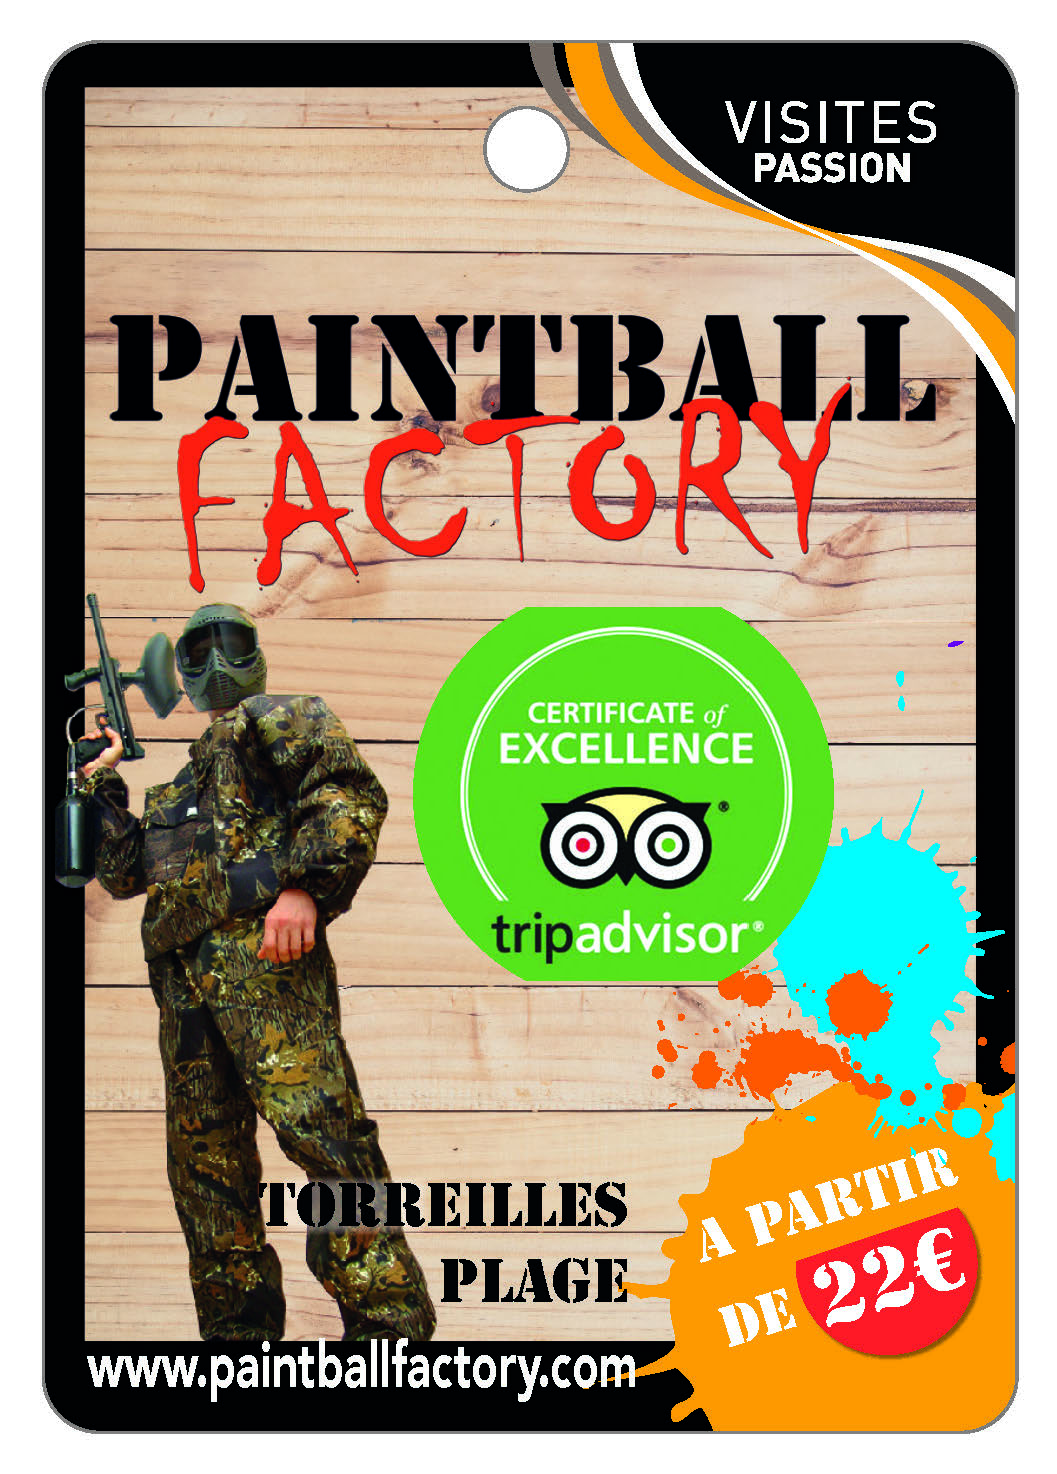 PAINT BALL factory